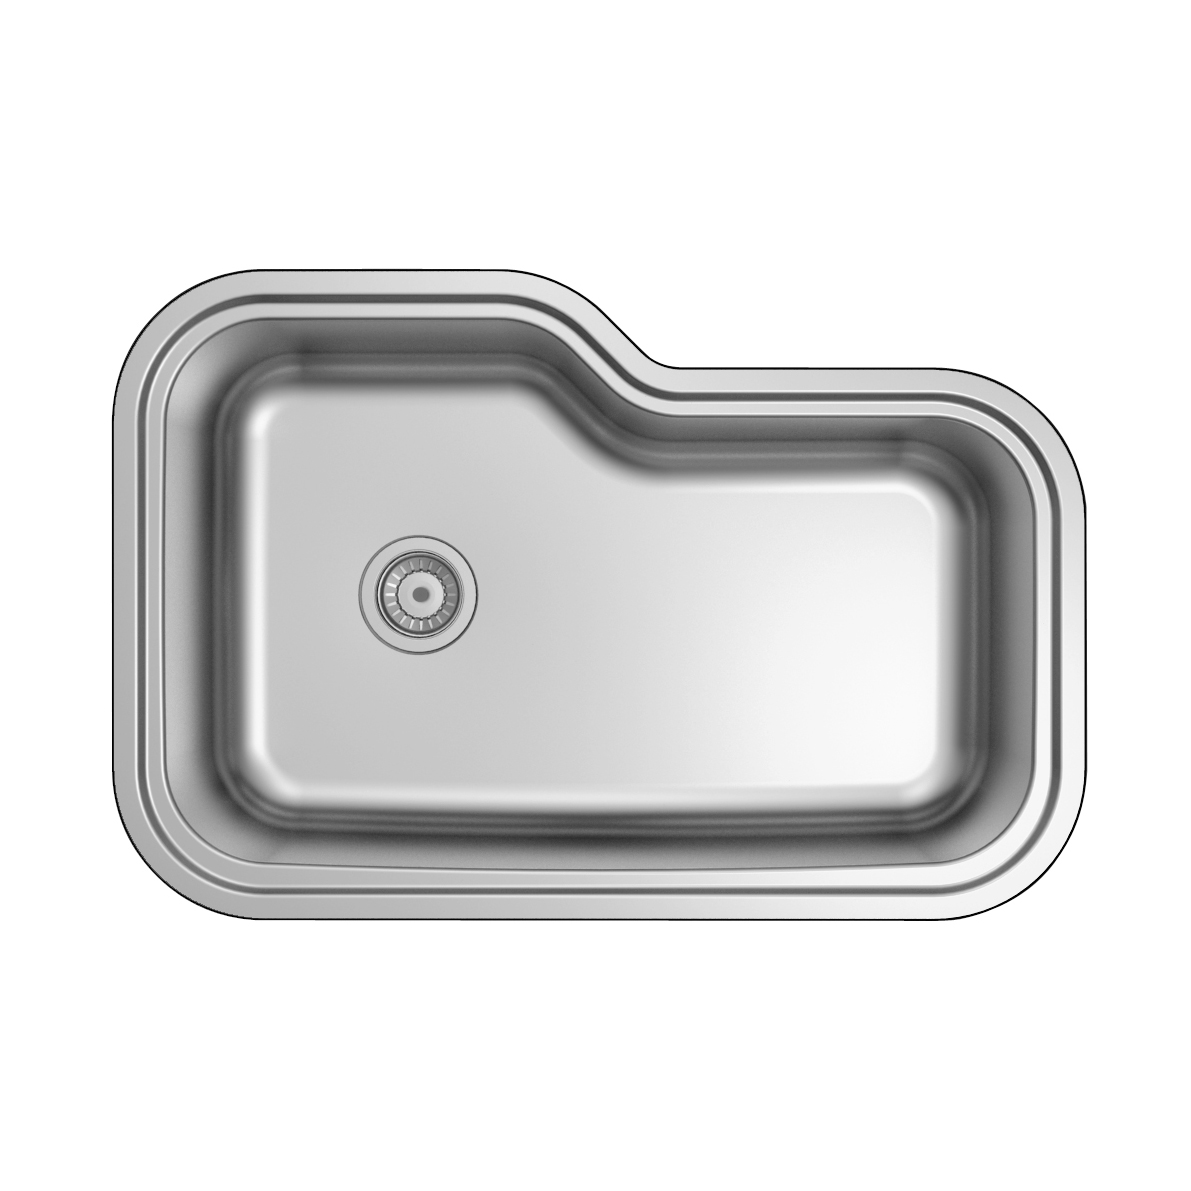 Stainless Steel Rectangular Single Bowl Pressed Drawn Kitchen Sink